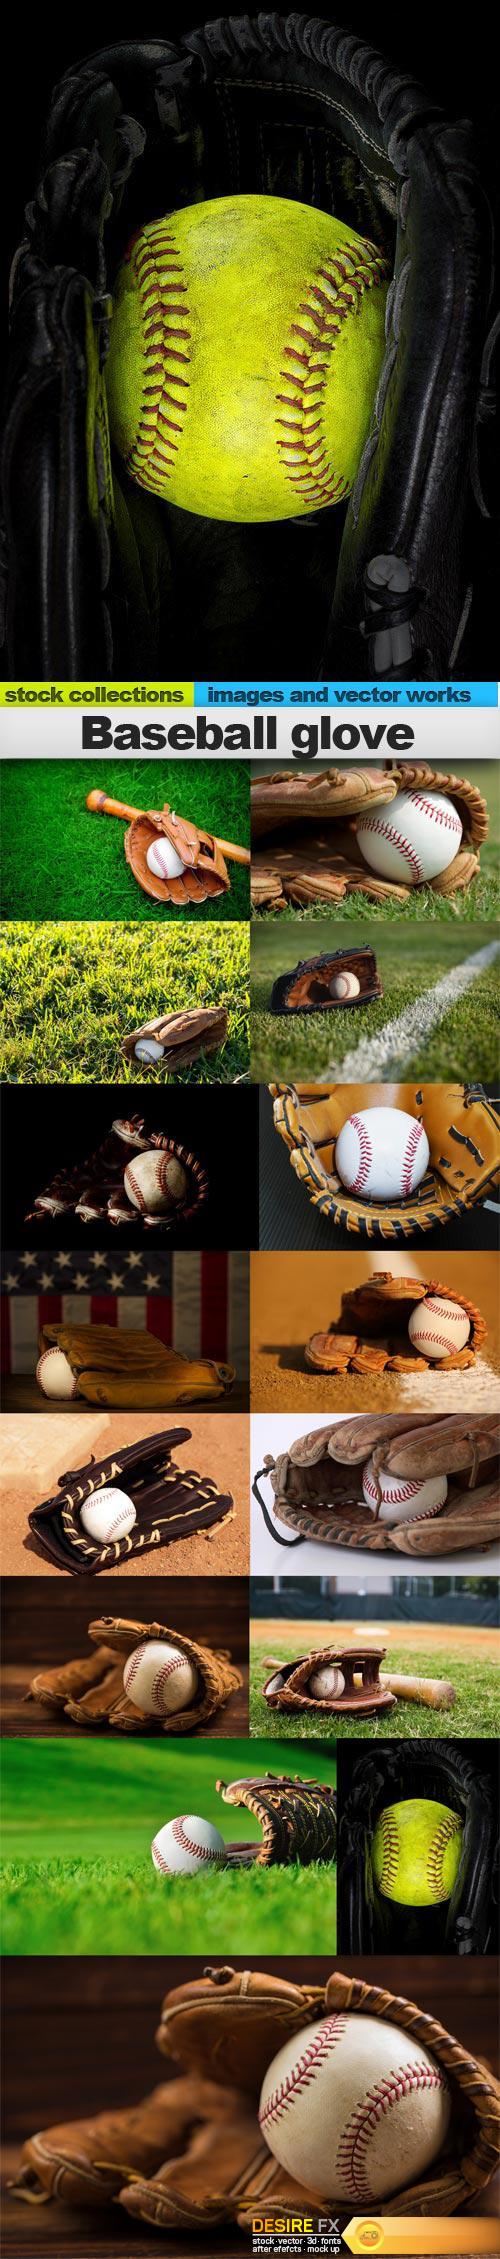 Baseball glove, 15 x UHQ JPEG